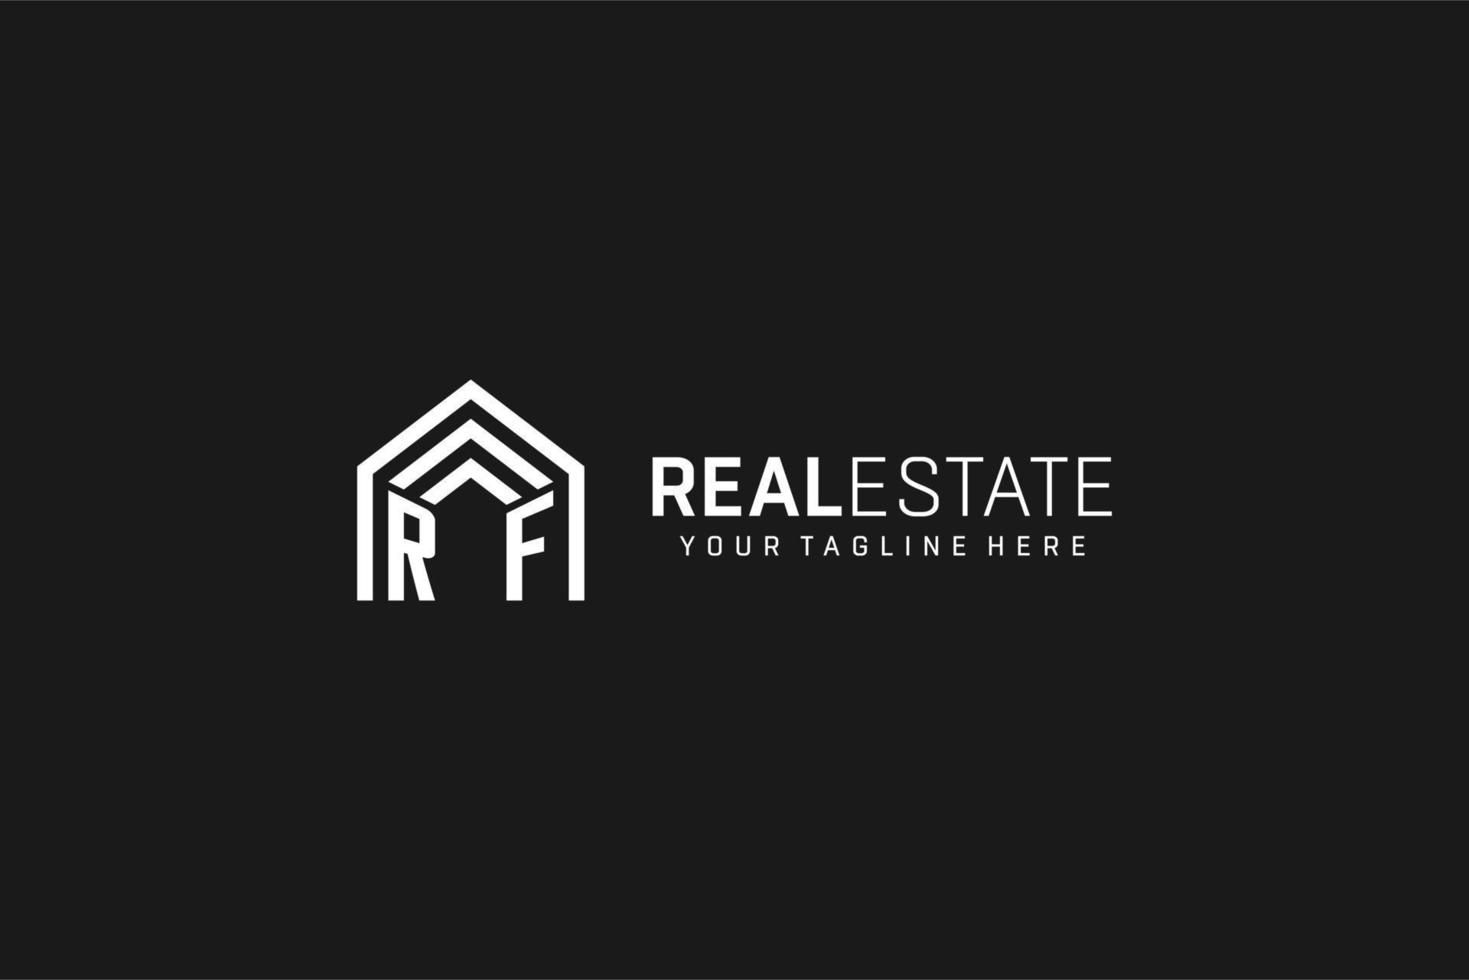 Letter RF house roof shape logo, creative real estate monogram logo style vector